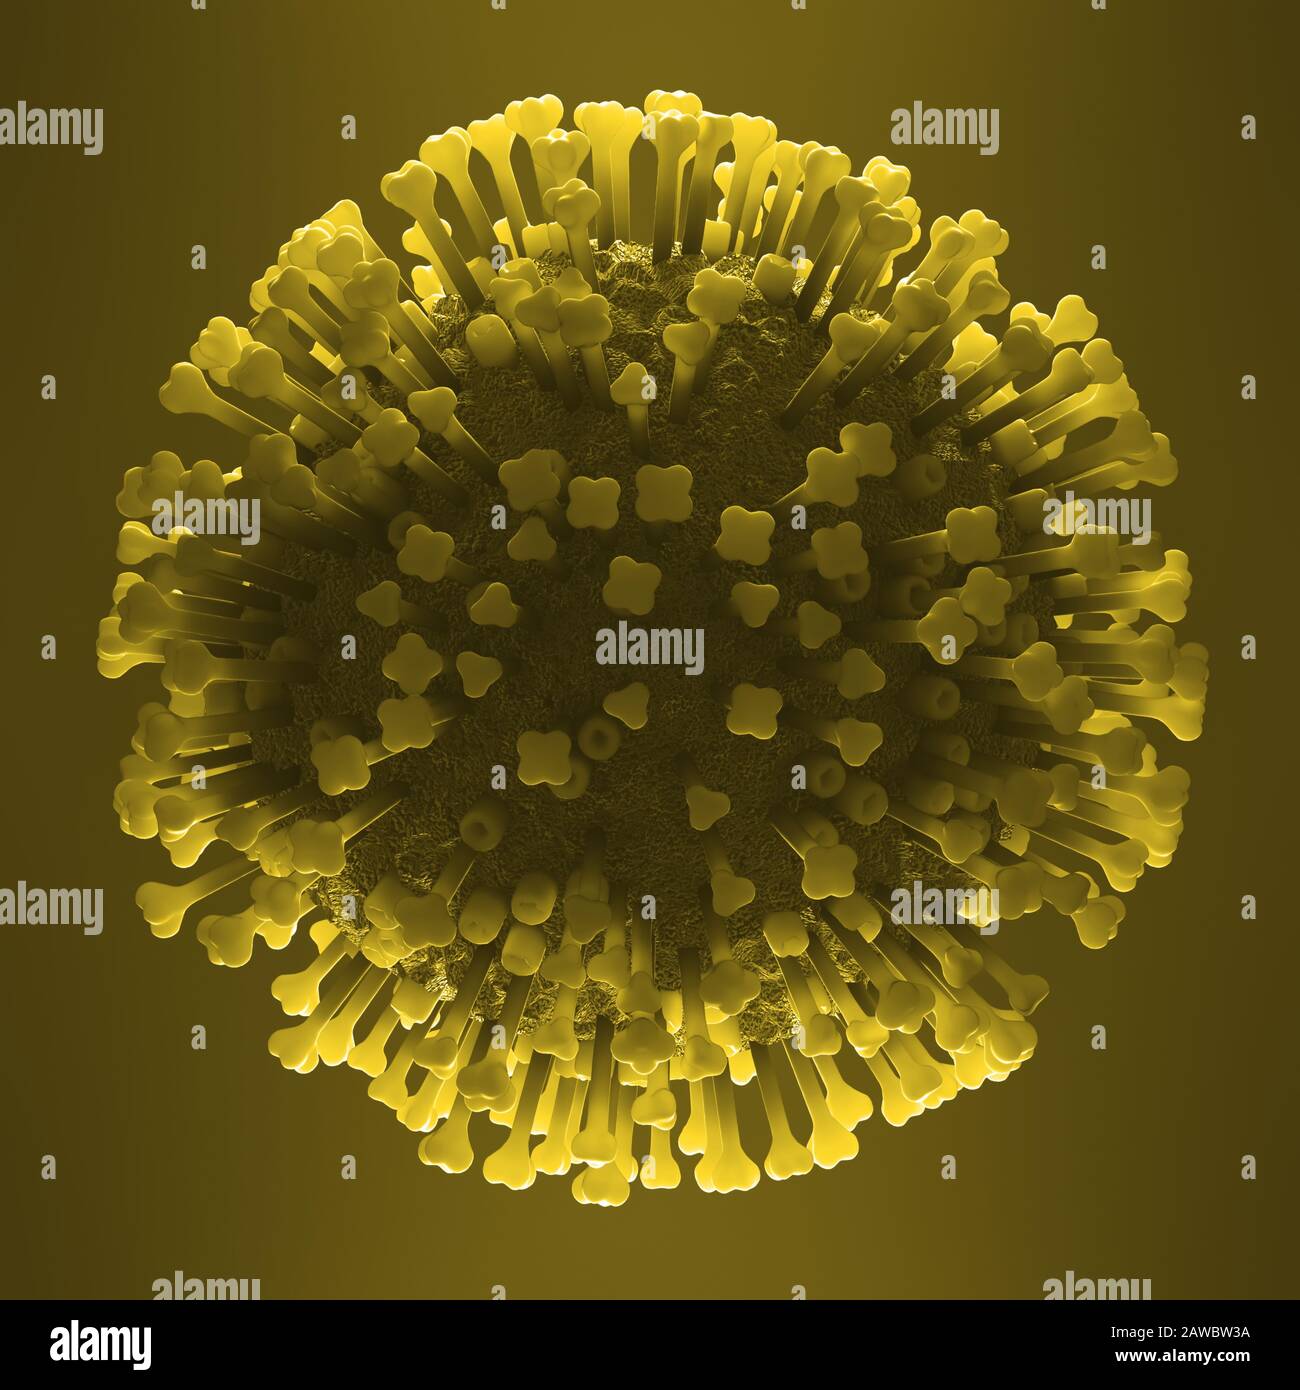 Influenza virus particle, illustration Stock Photo